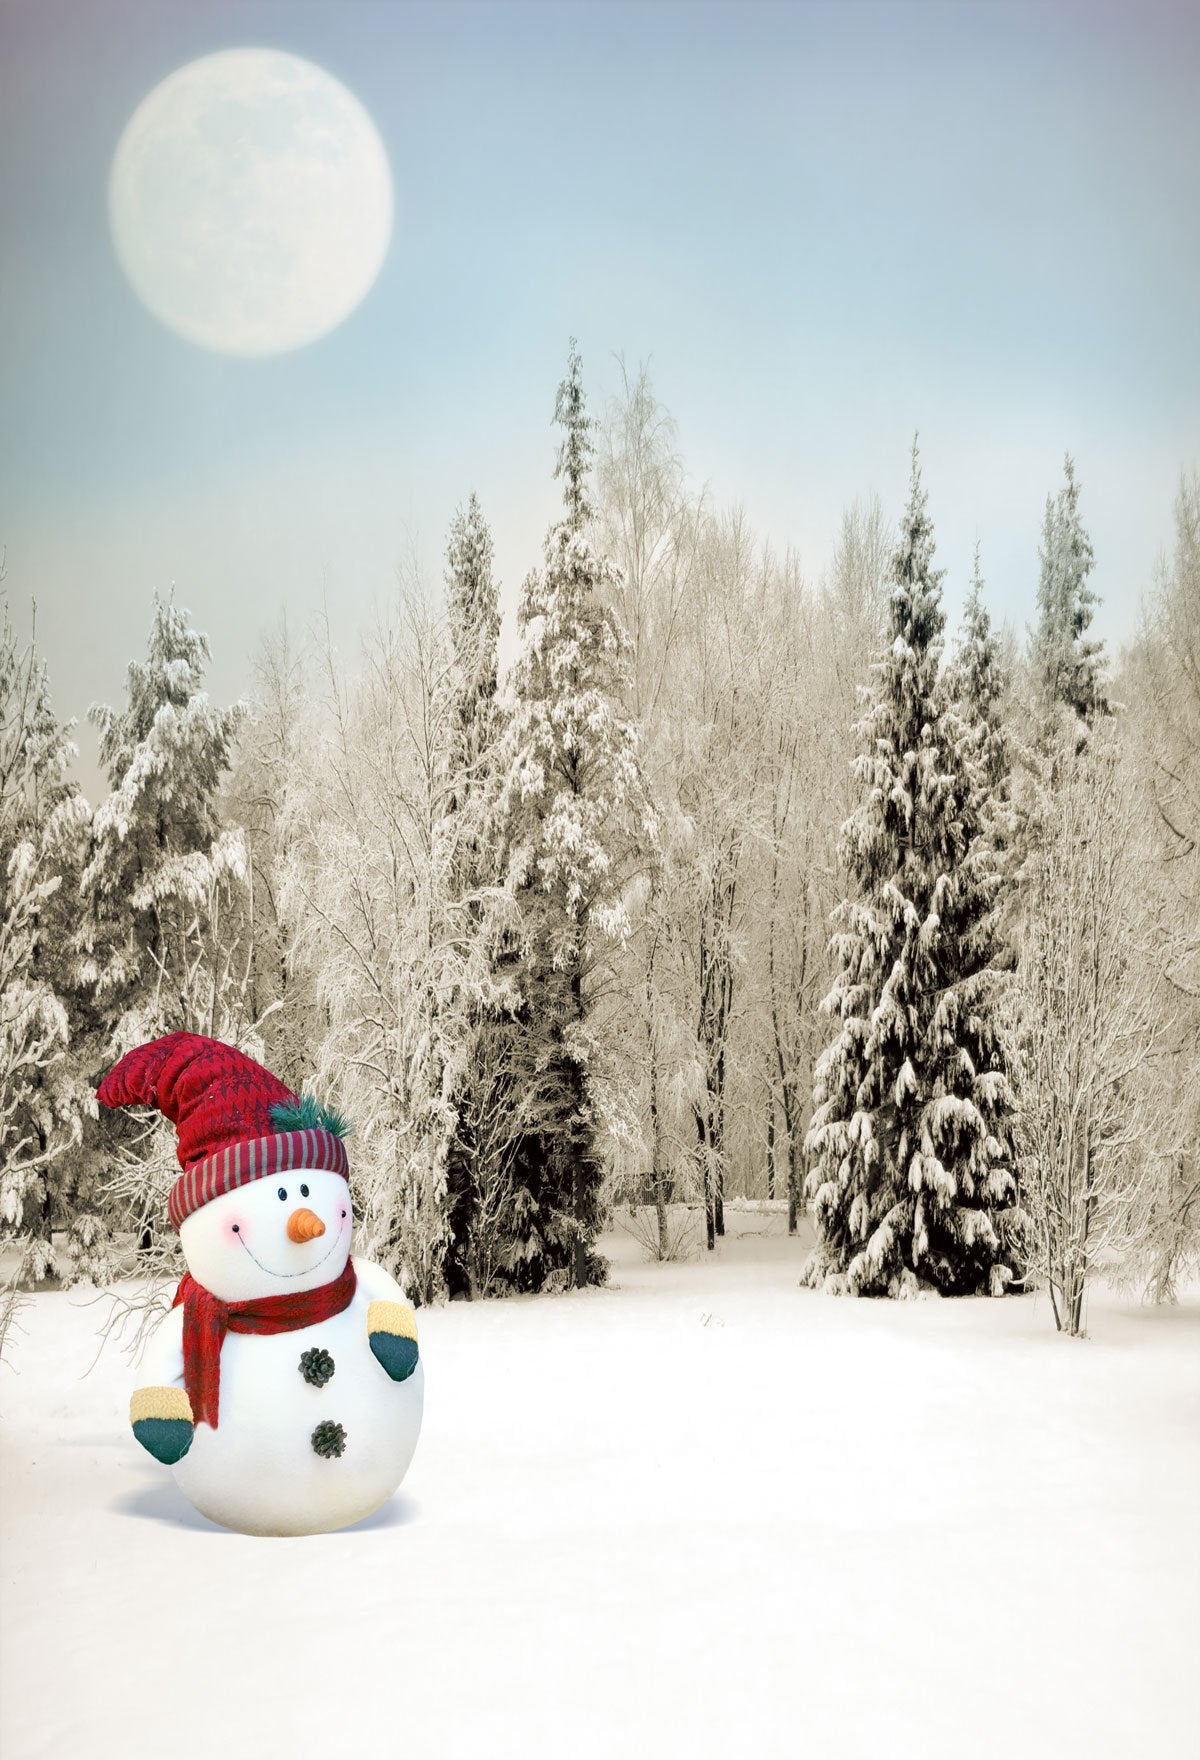 Katebackdrop：Kate Snowman Moon Frozen Trees Winter Backdrop for Photography